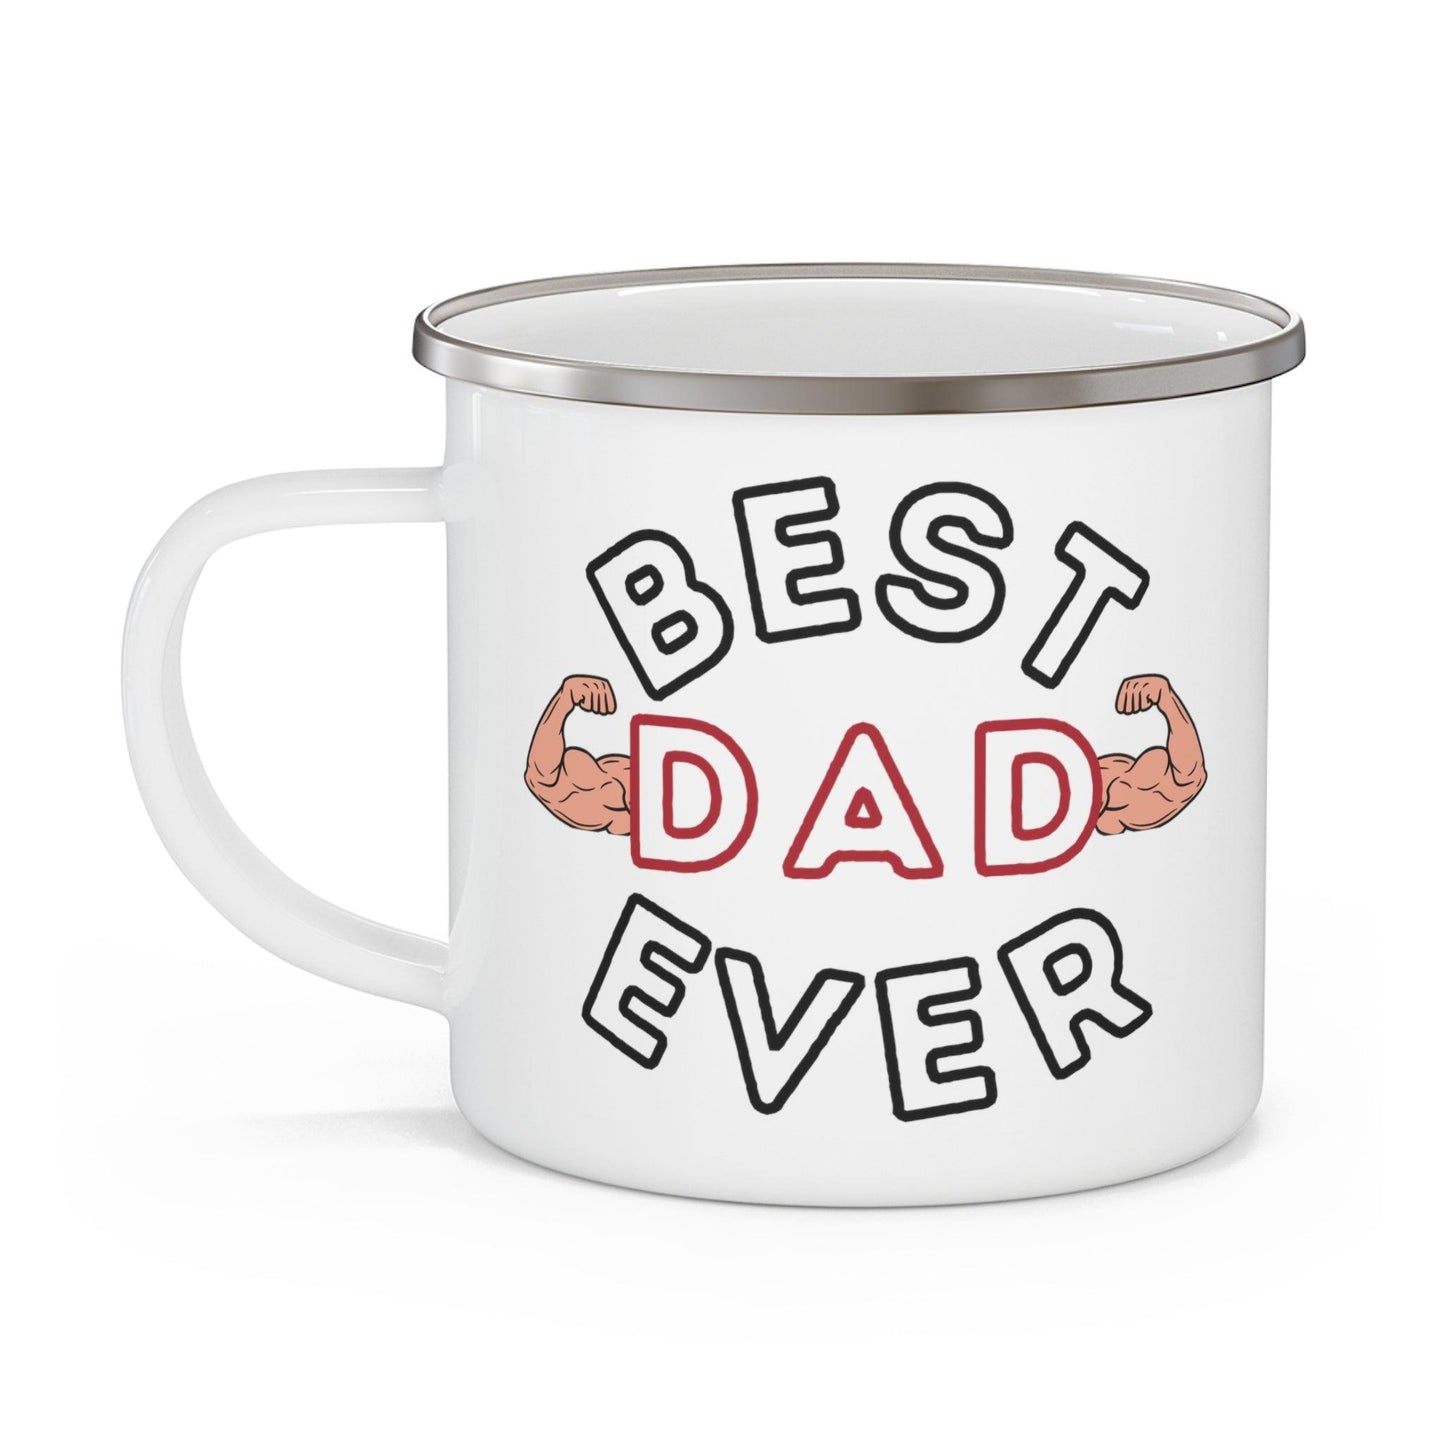 Best Dad Ever Mug, Enamel Camping Mug, Camping gift, Gift for dad, Father's day gift, Dad Mug, Dad gift - Giftsmojo